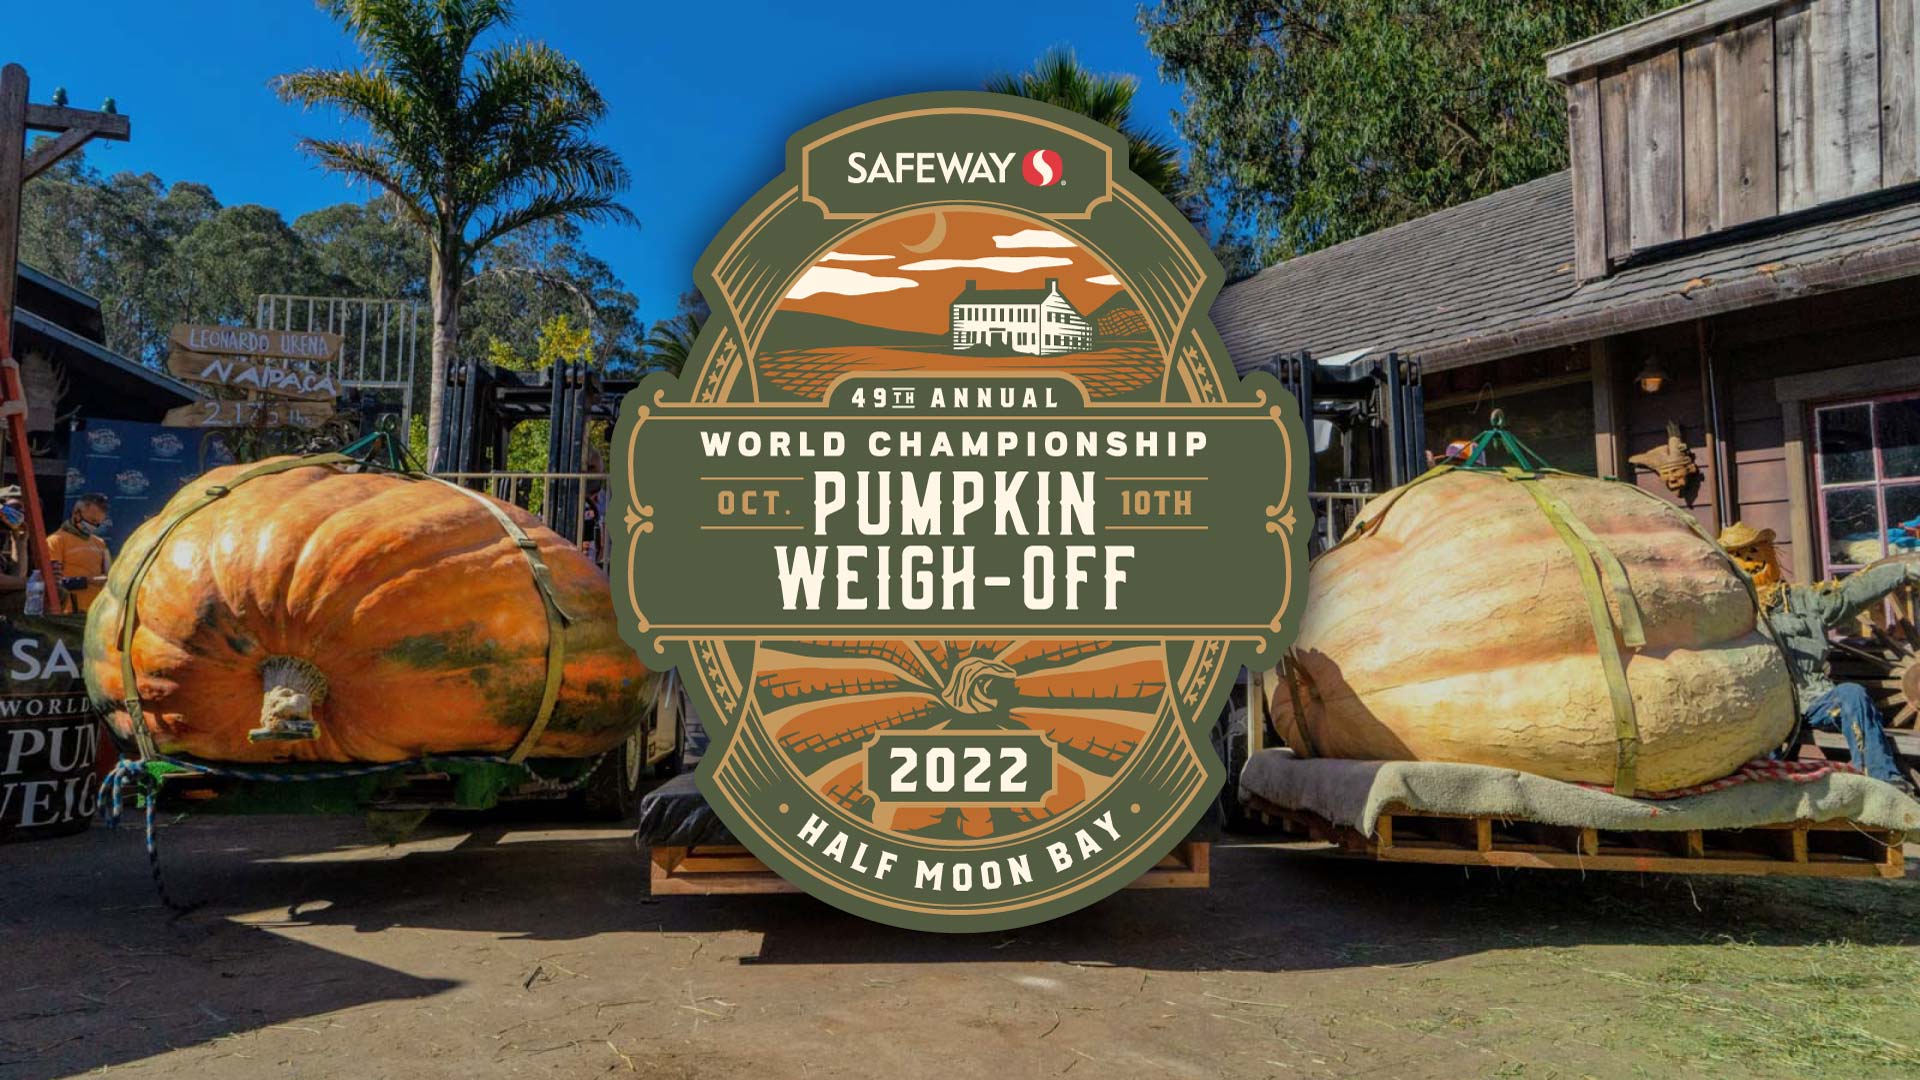 49th Annual Safeway World Championship Pumpkin Weigh-Off, October 10, 2022 in Half Moon Bay CA